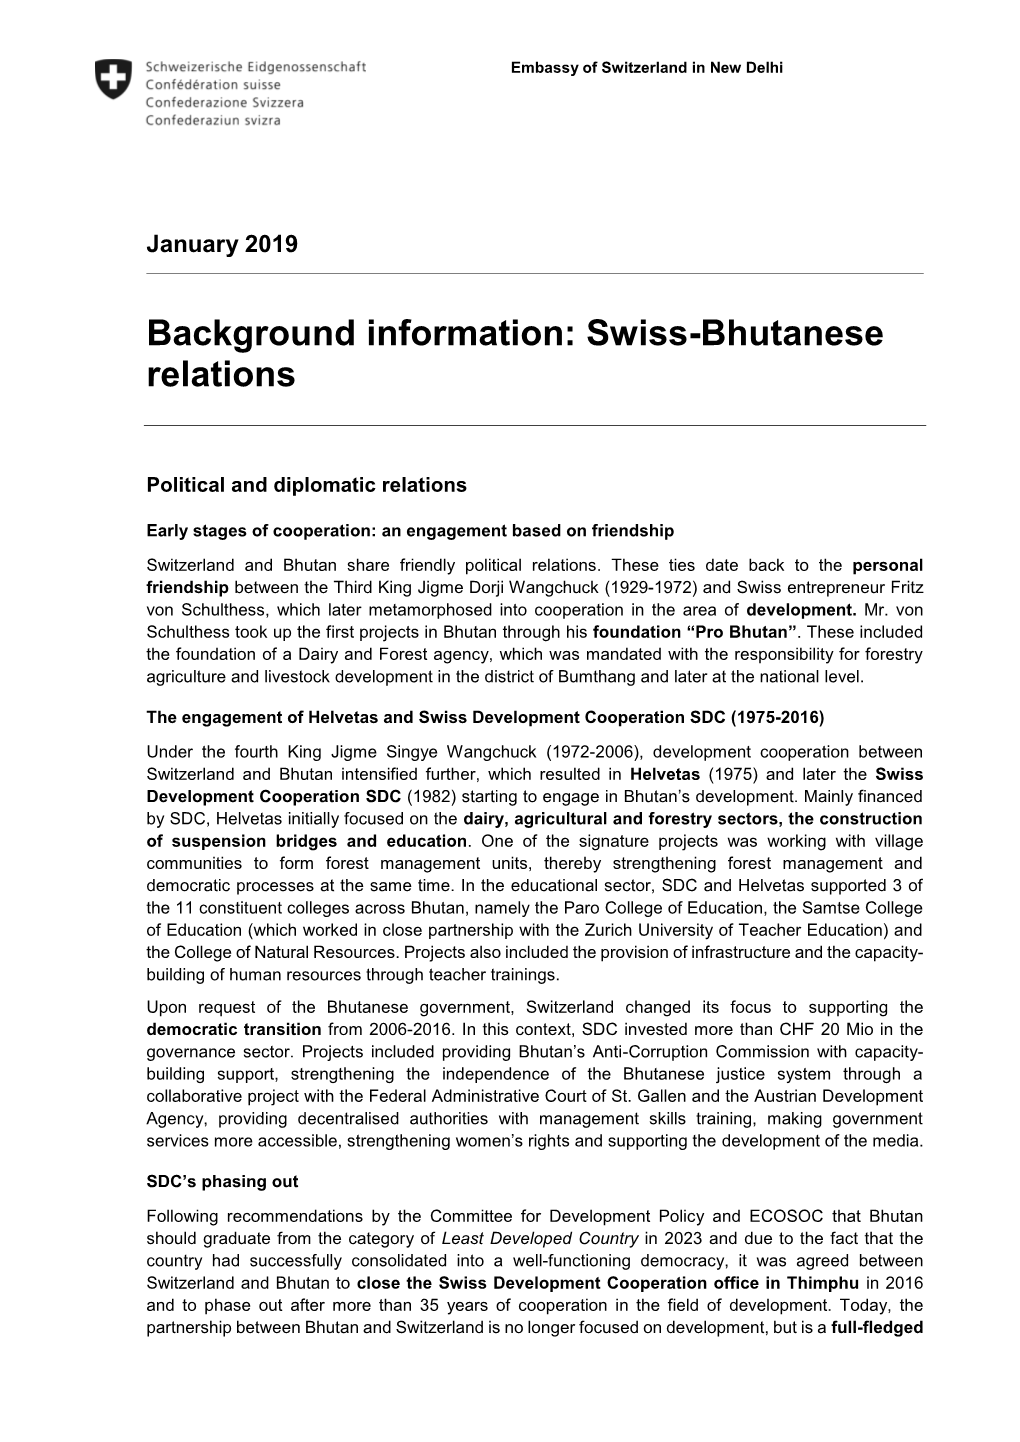 Background Information: Swiss-Bhutanese Relations